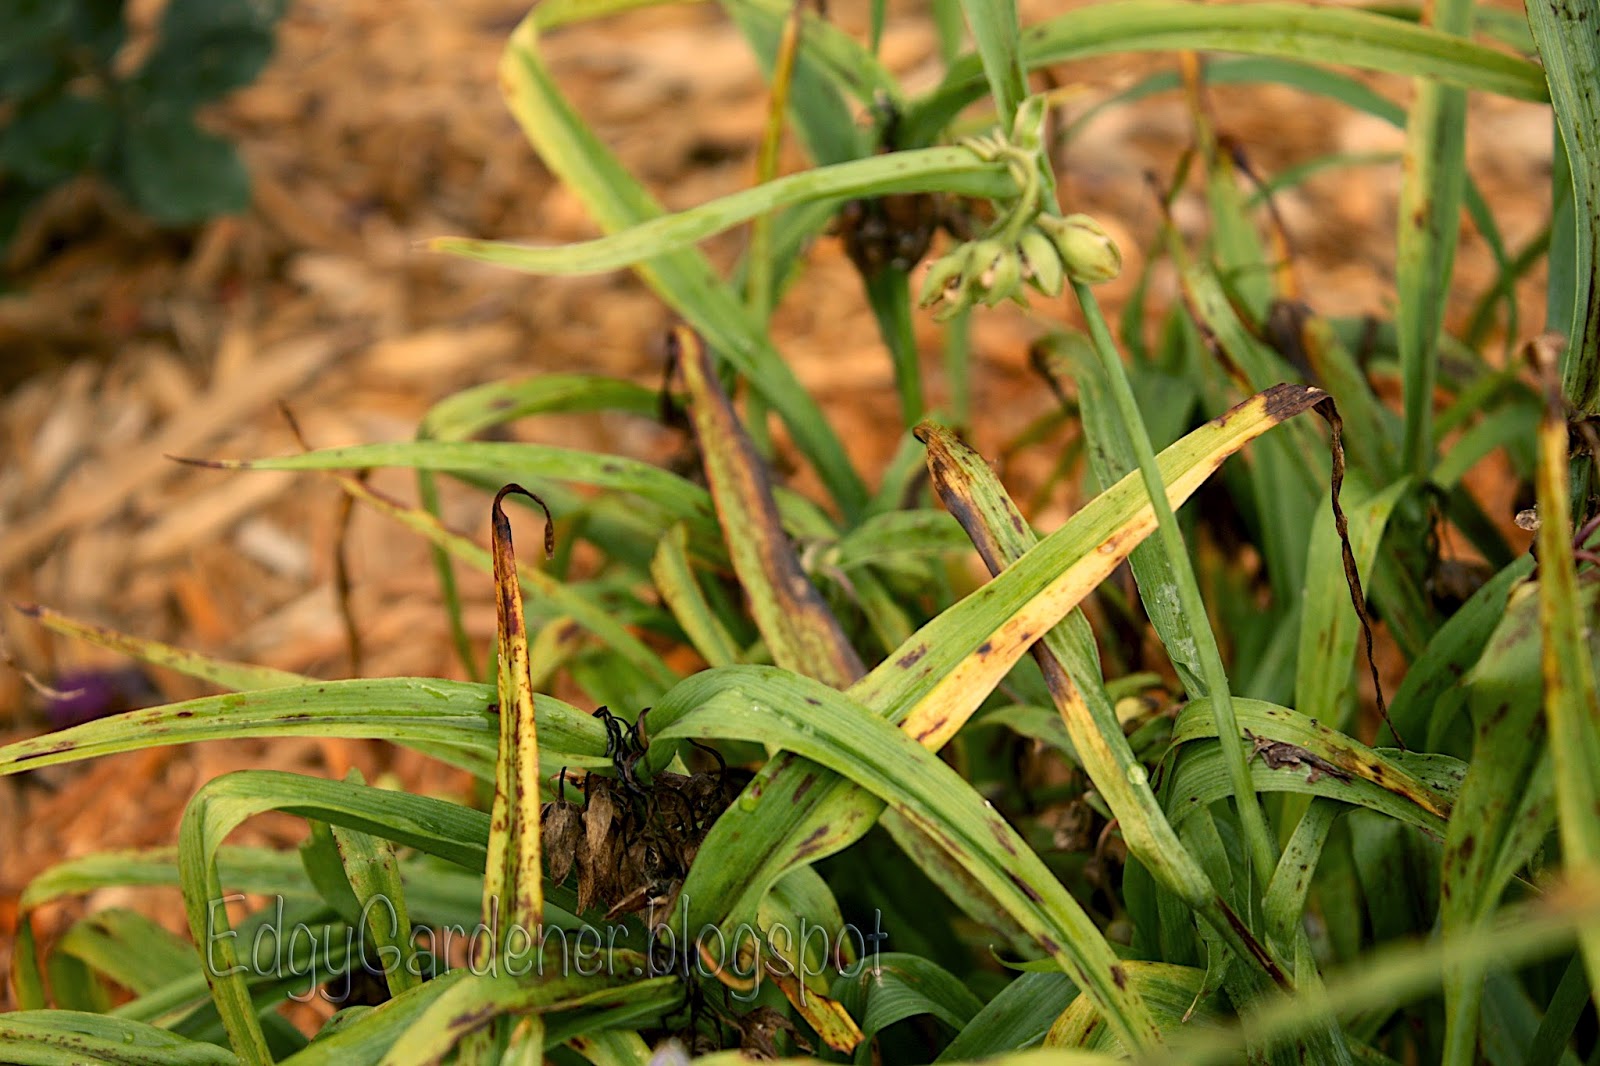 The Edgy Gardener Blog Ugly Spiderwort,Starbuck Sizes